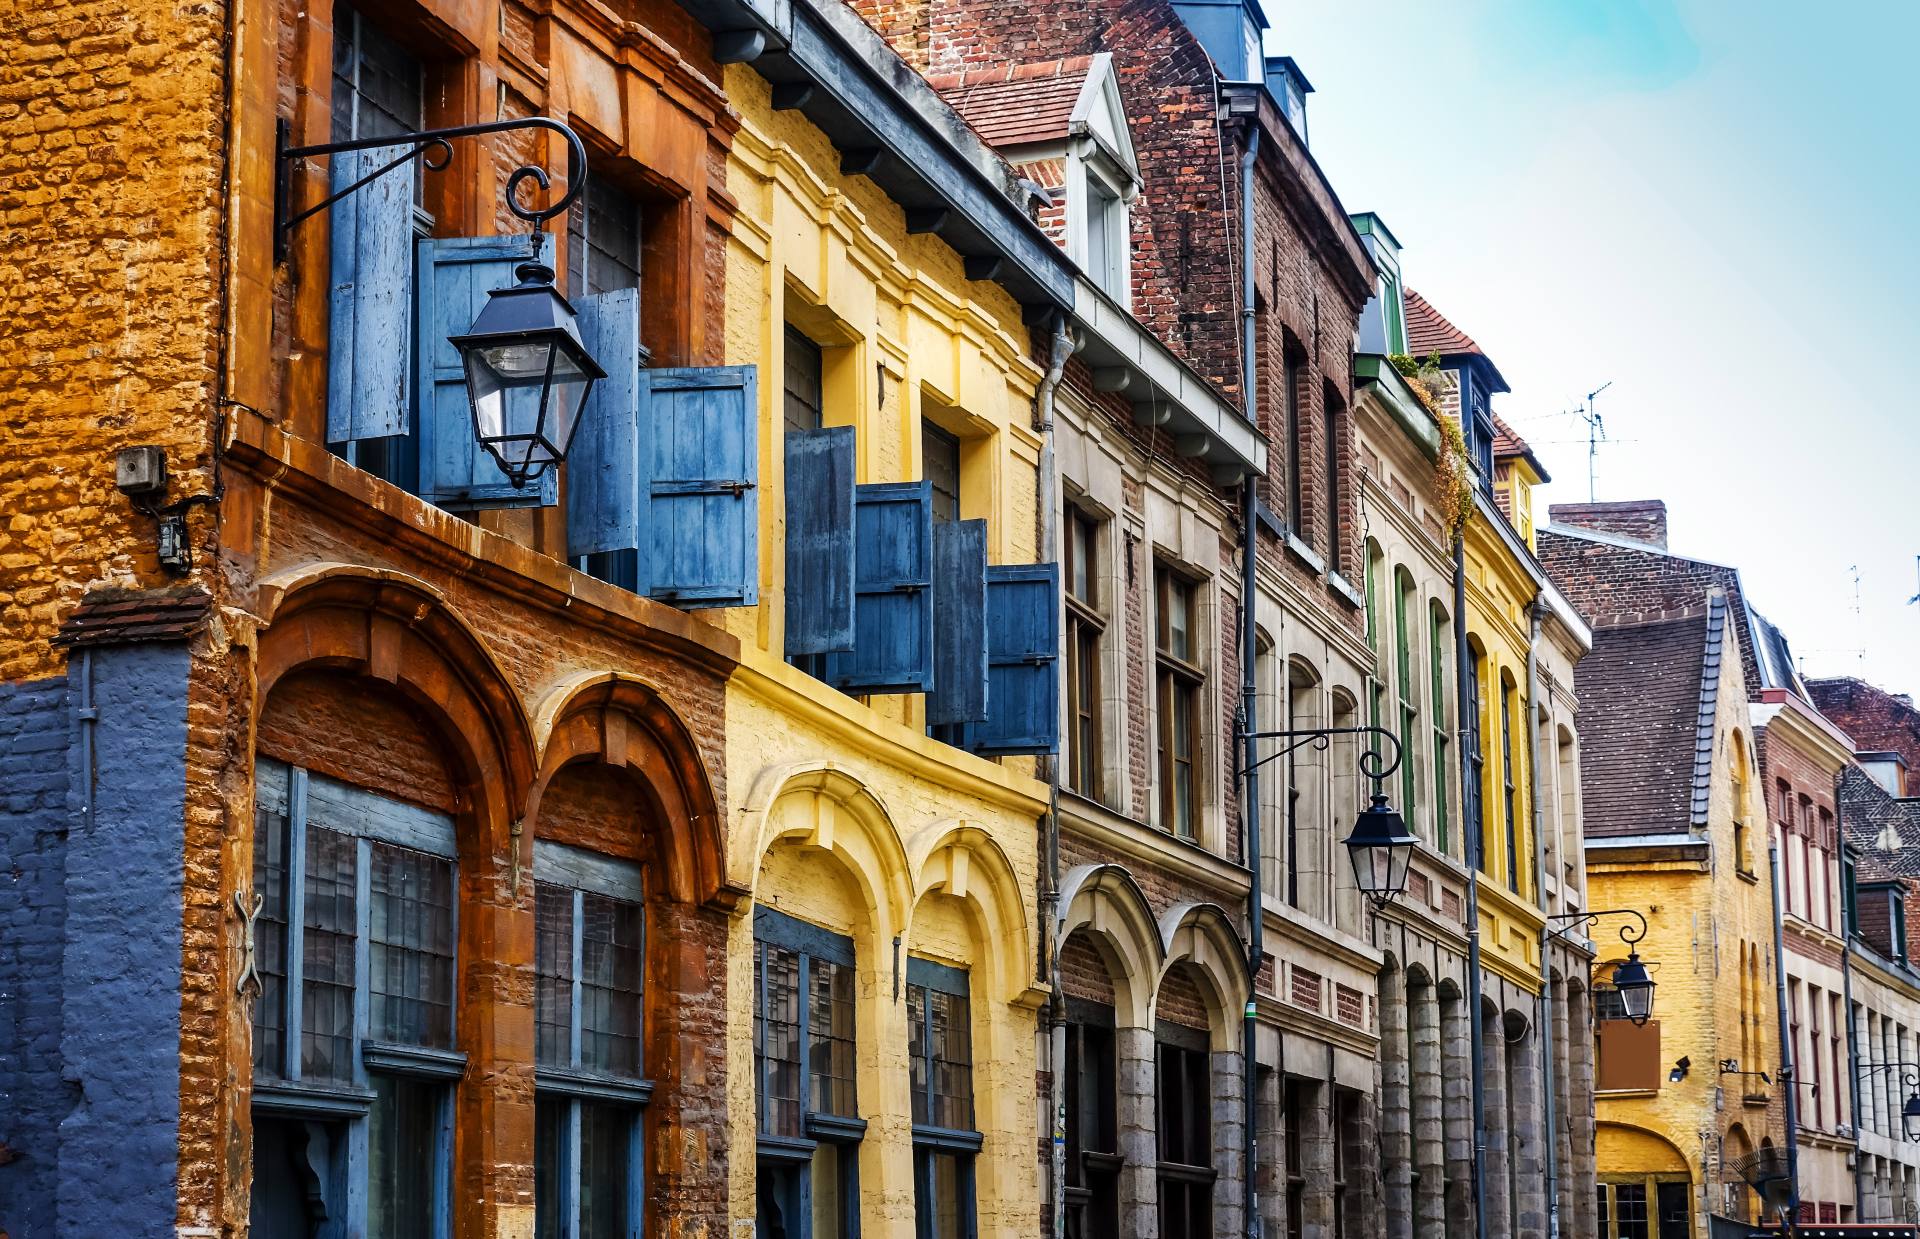 Vieux Lille (Image: ilolab/Shutterstock)